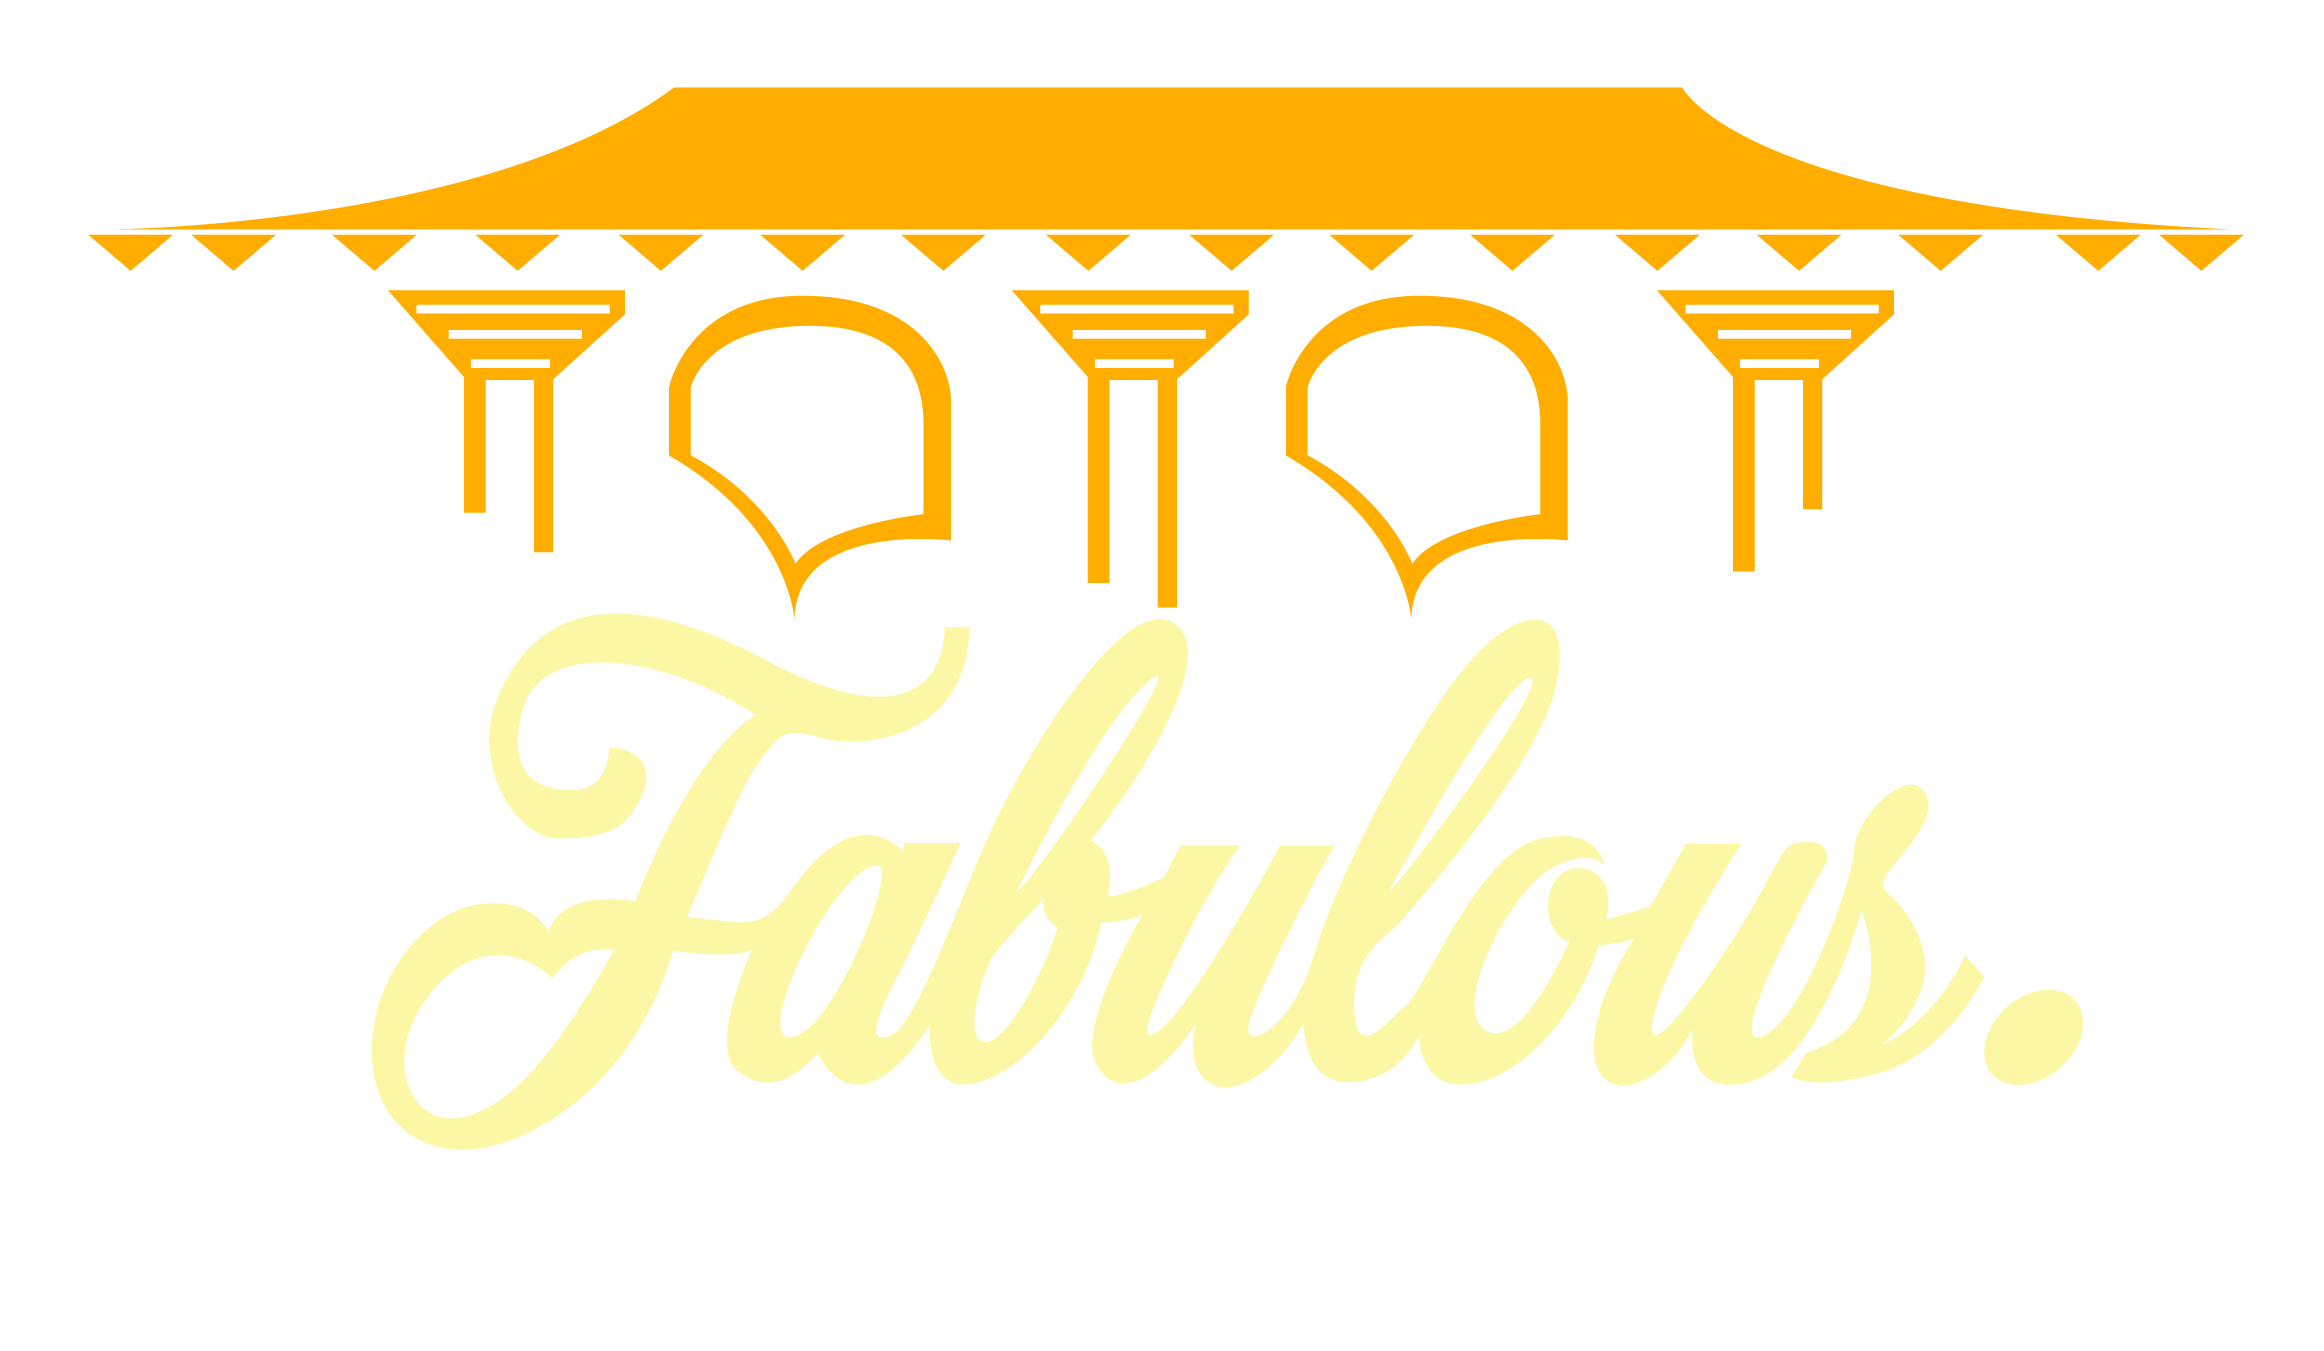 The Fabulous